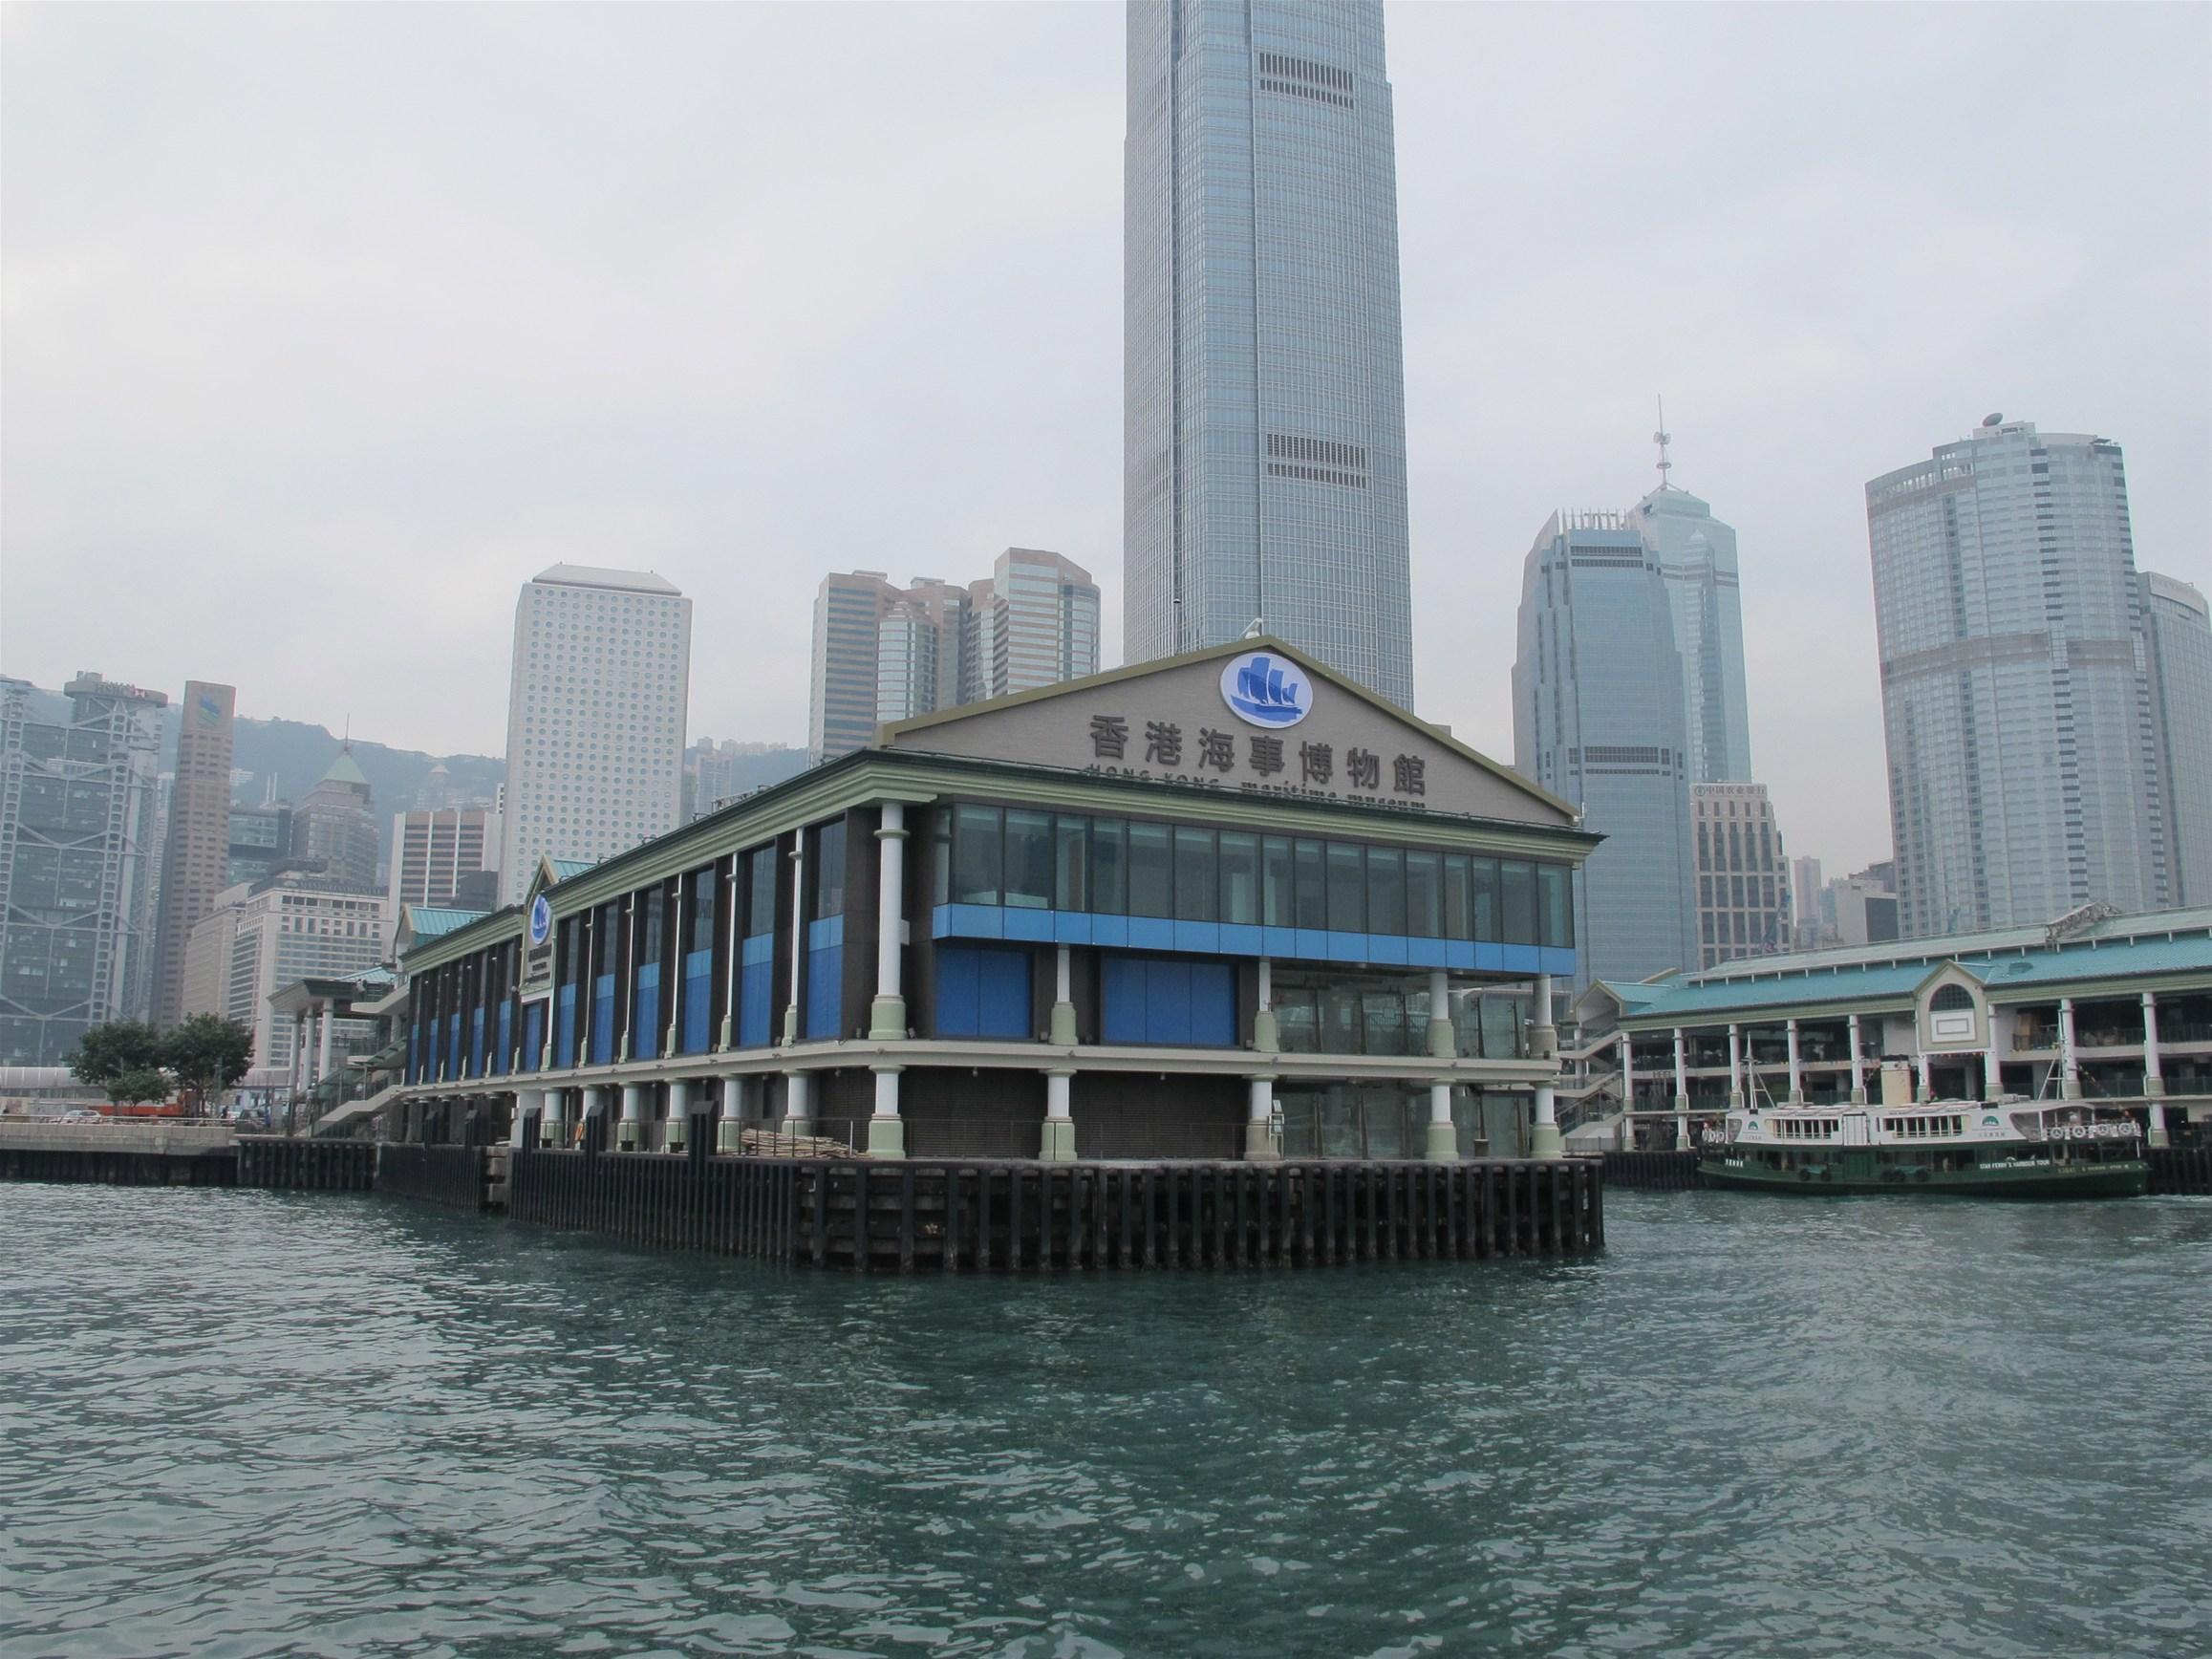 Immerse yourself in Hong Kong's rich history with the sea (Hong Kong Tourism Board/discoverhongkong.com)